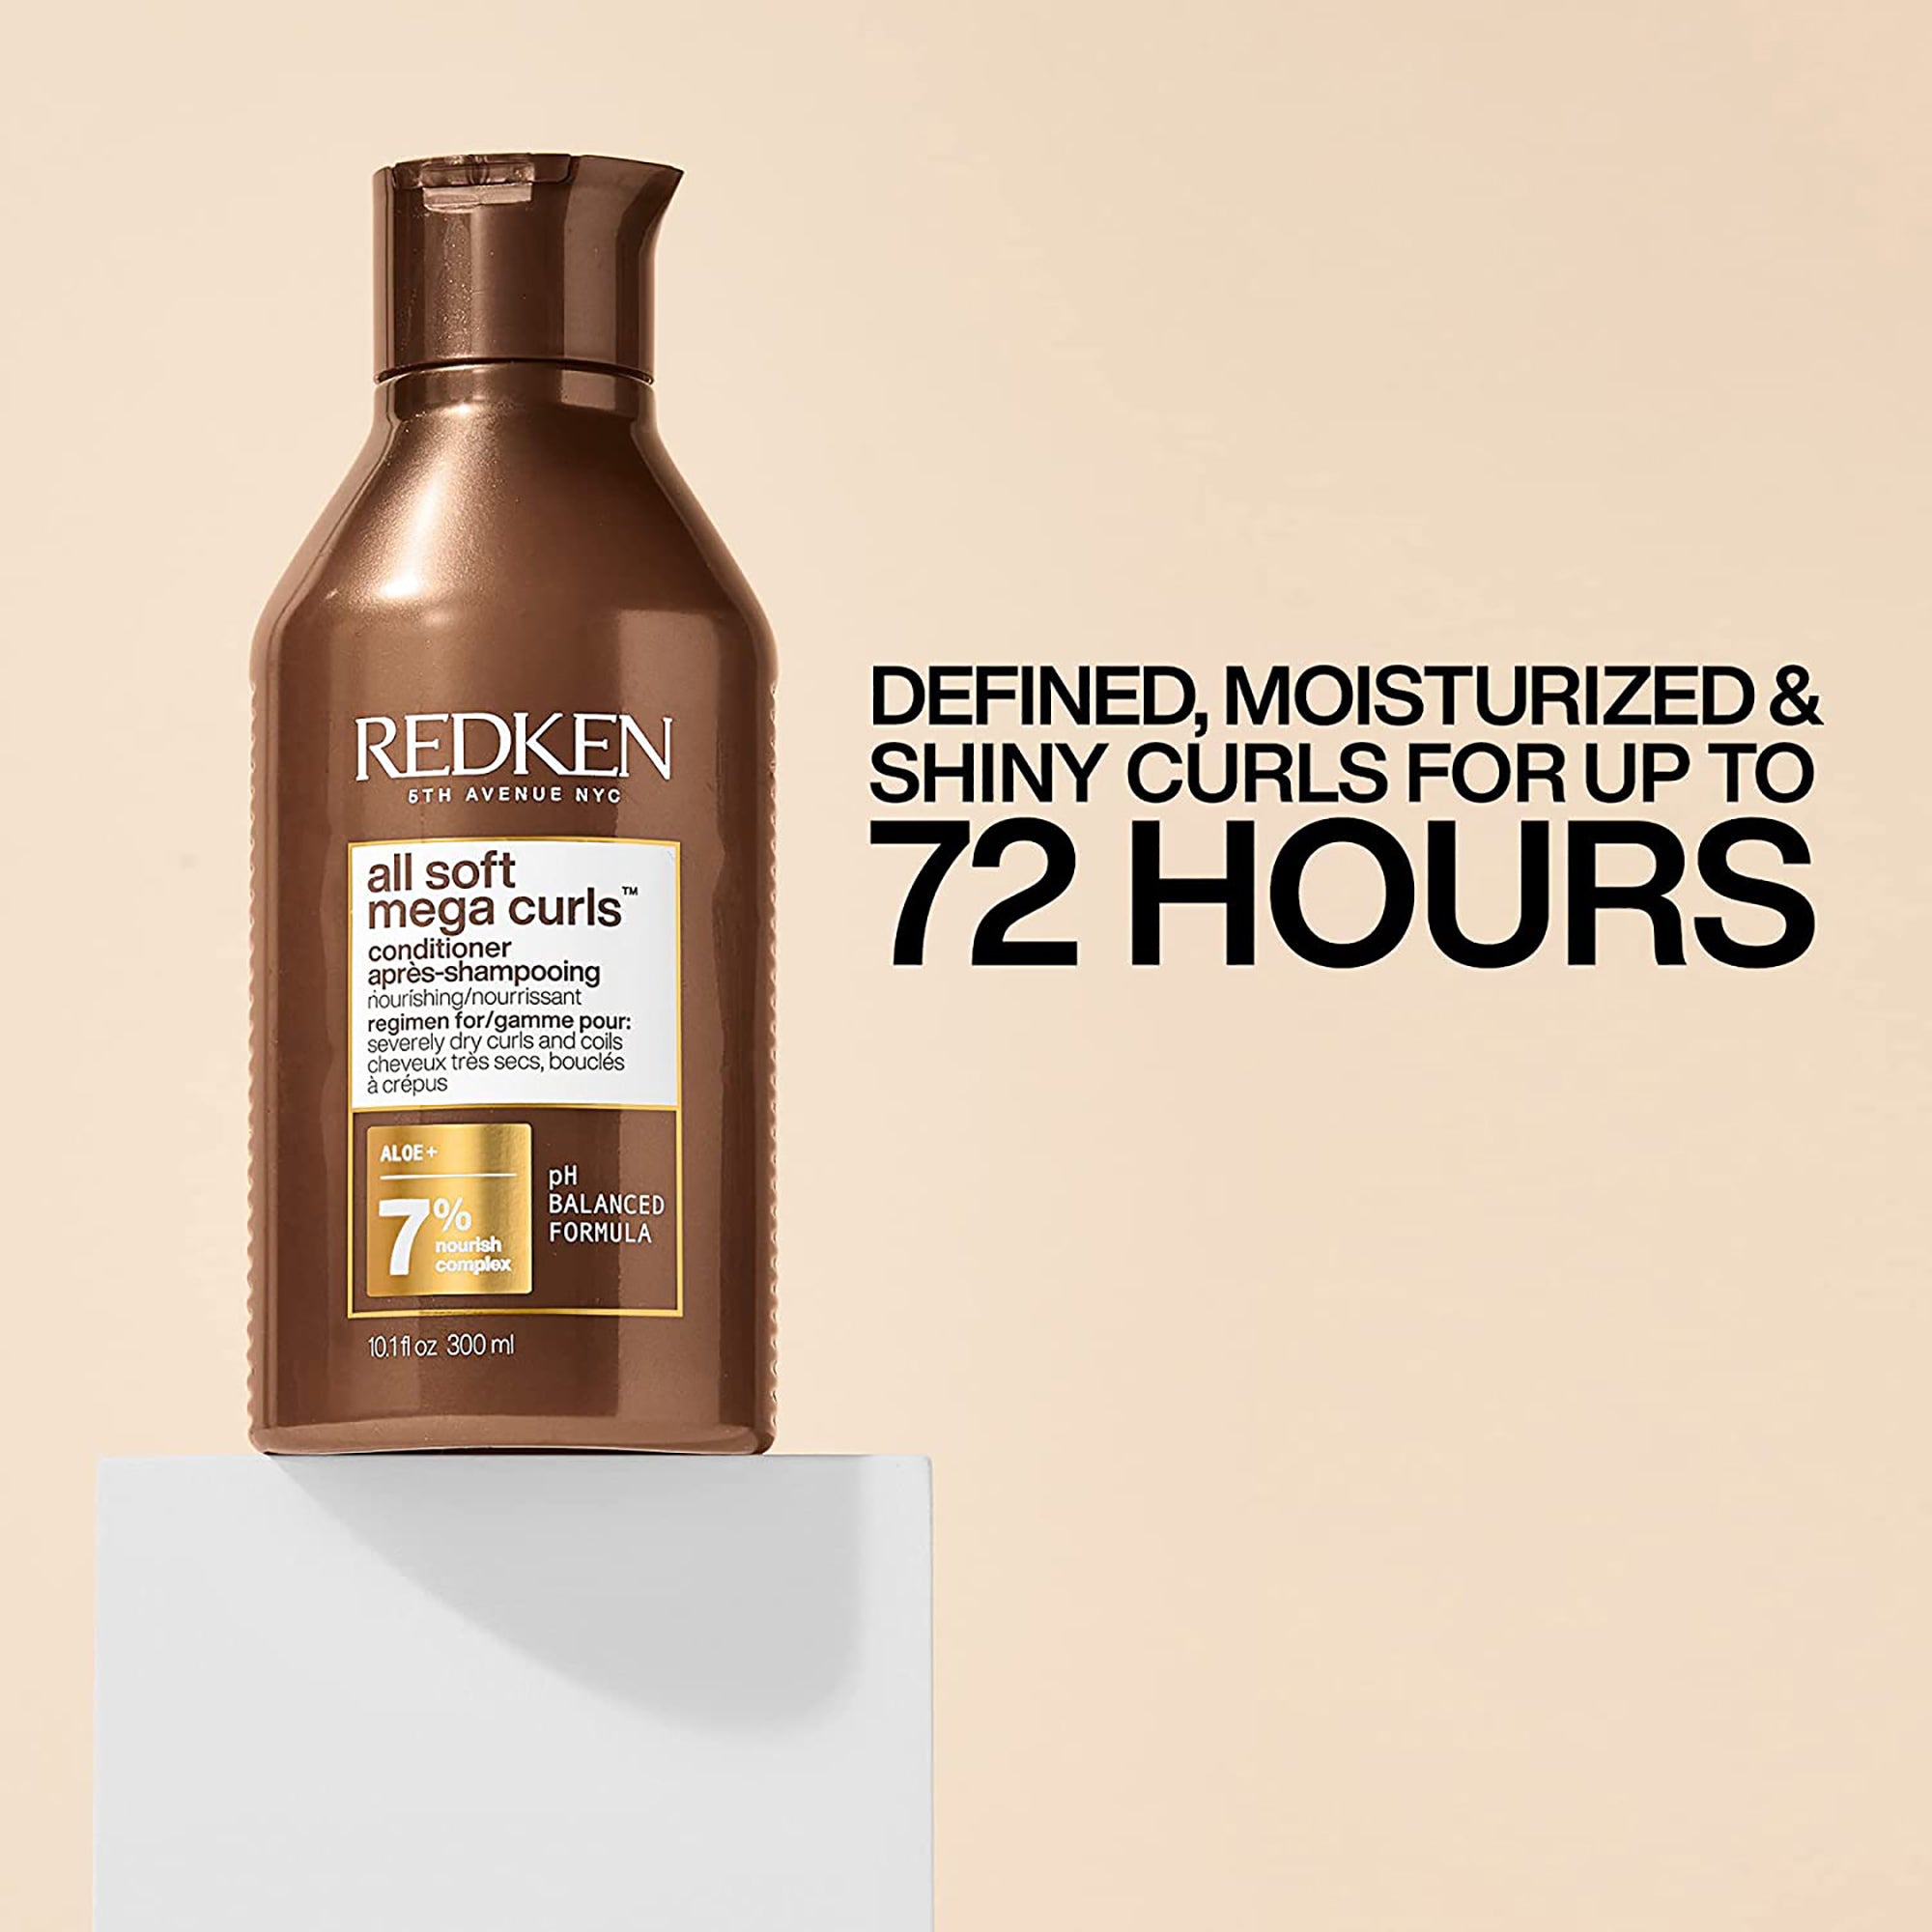 Redken All Soft Mega Curls Shampoo and Conditioner Duo - 10oz ($52 Value) / 10OZ